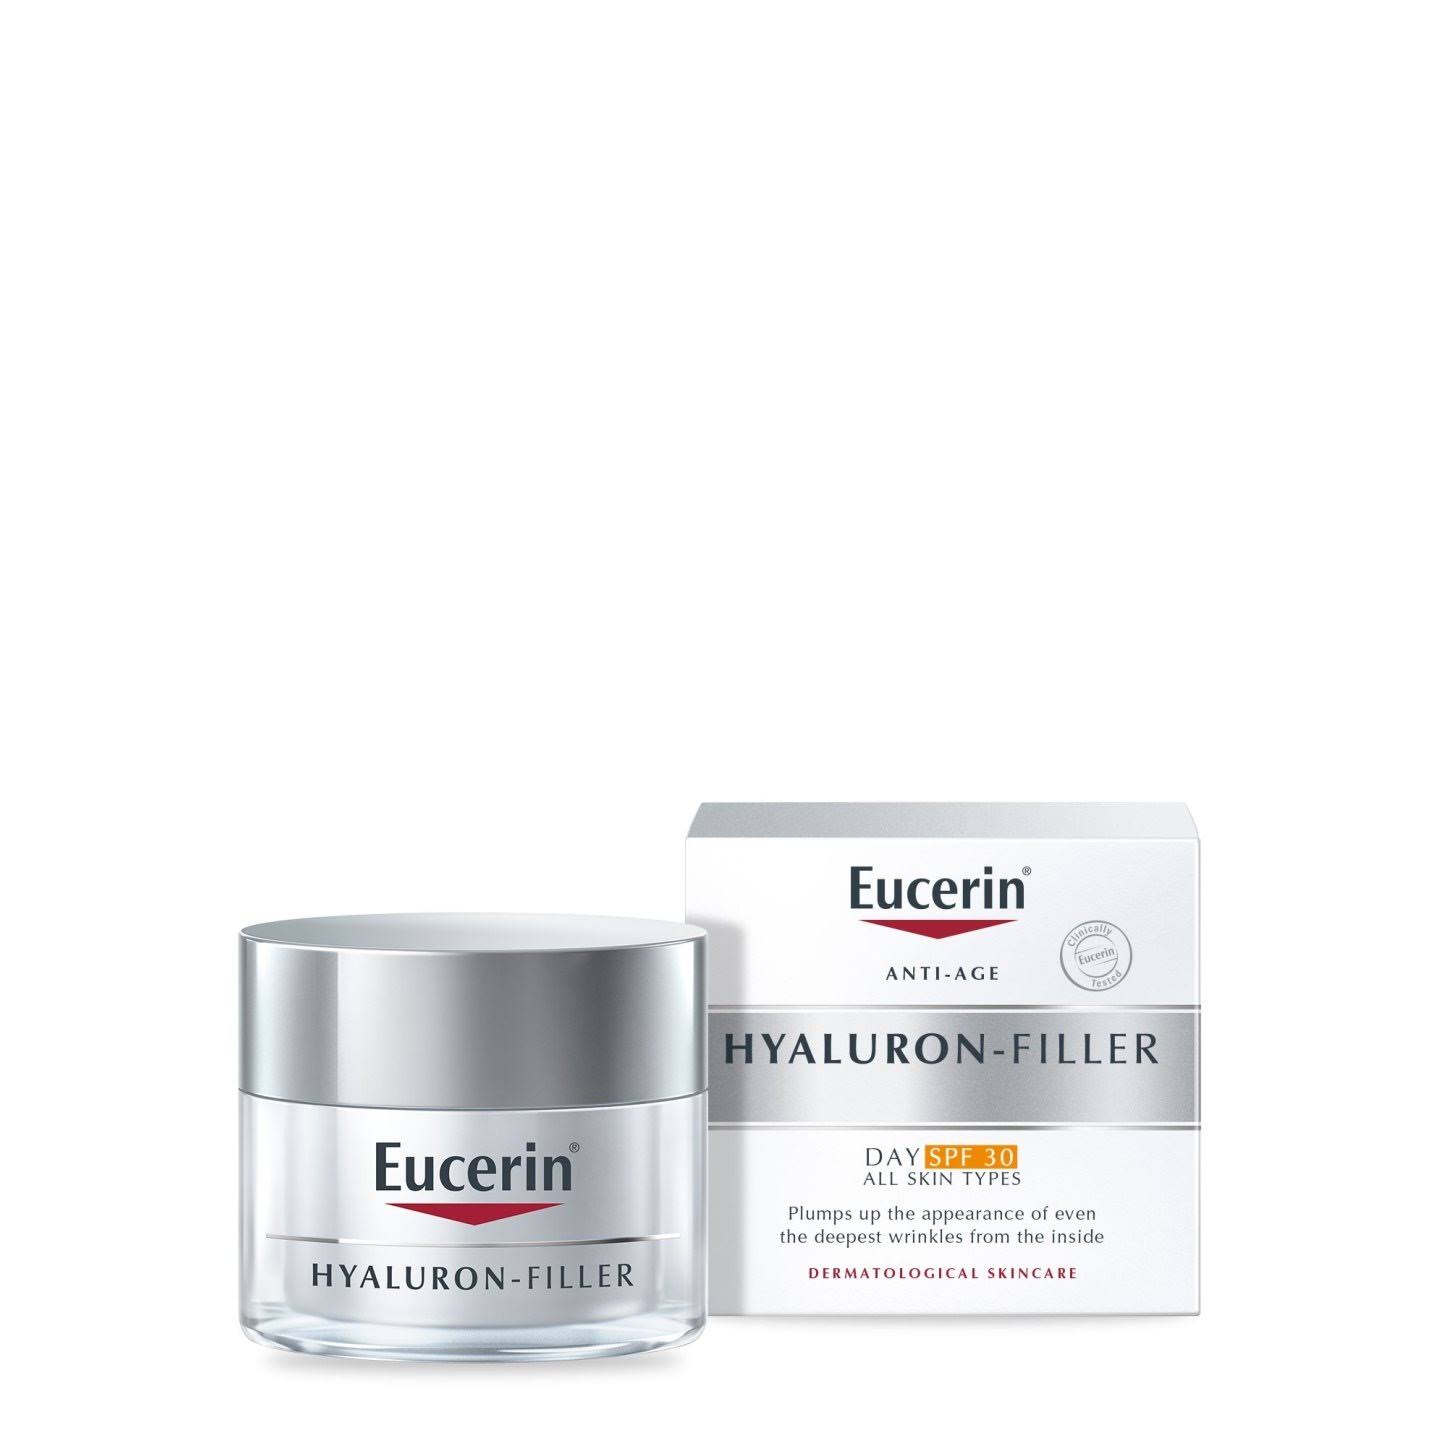 Eucerin Anti-Age Hyaluron-Filler Day Cream SPF30 - 50ml